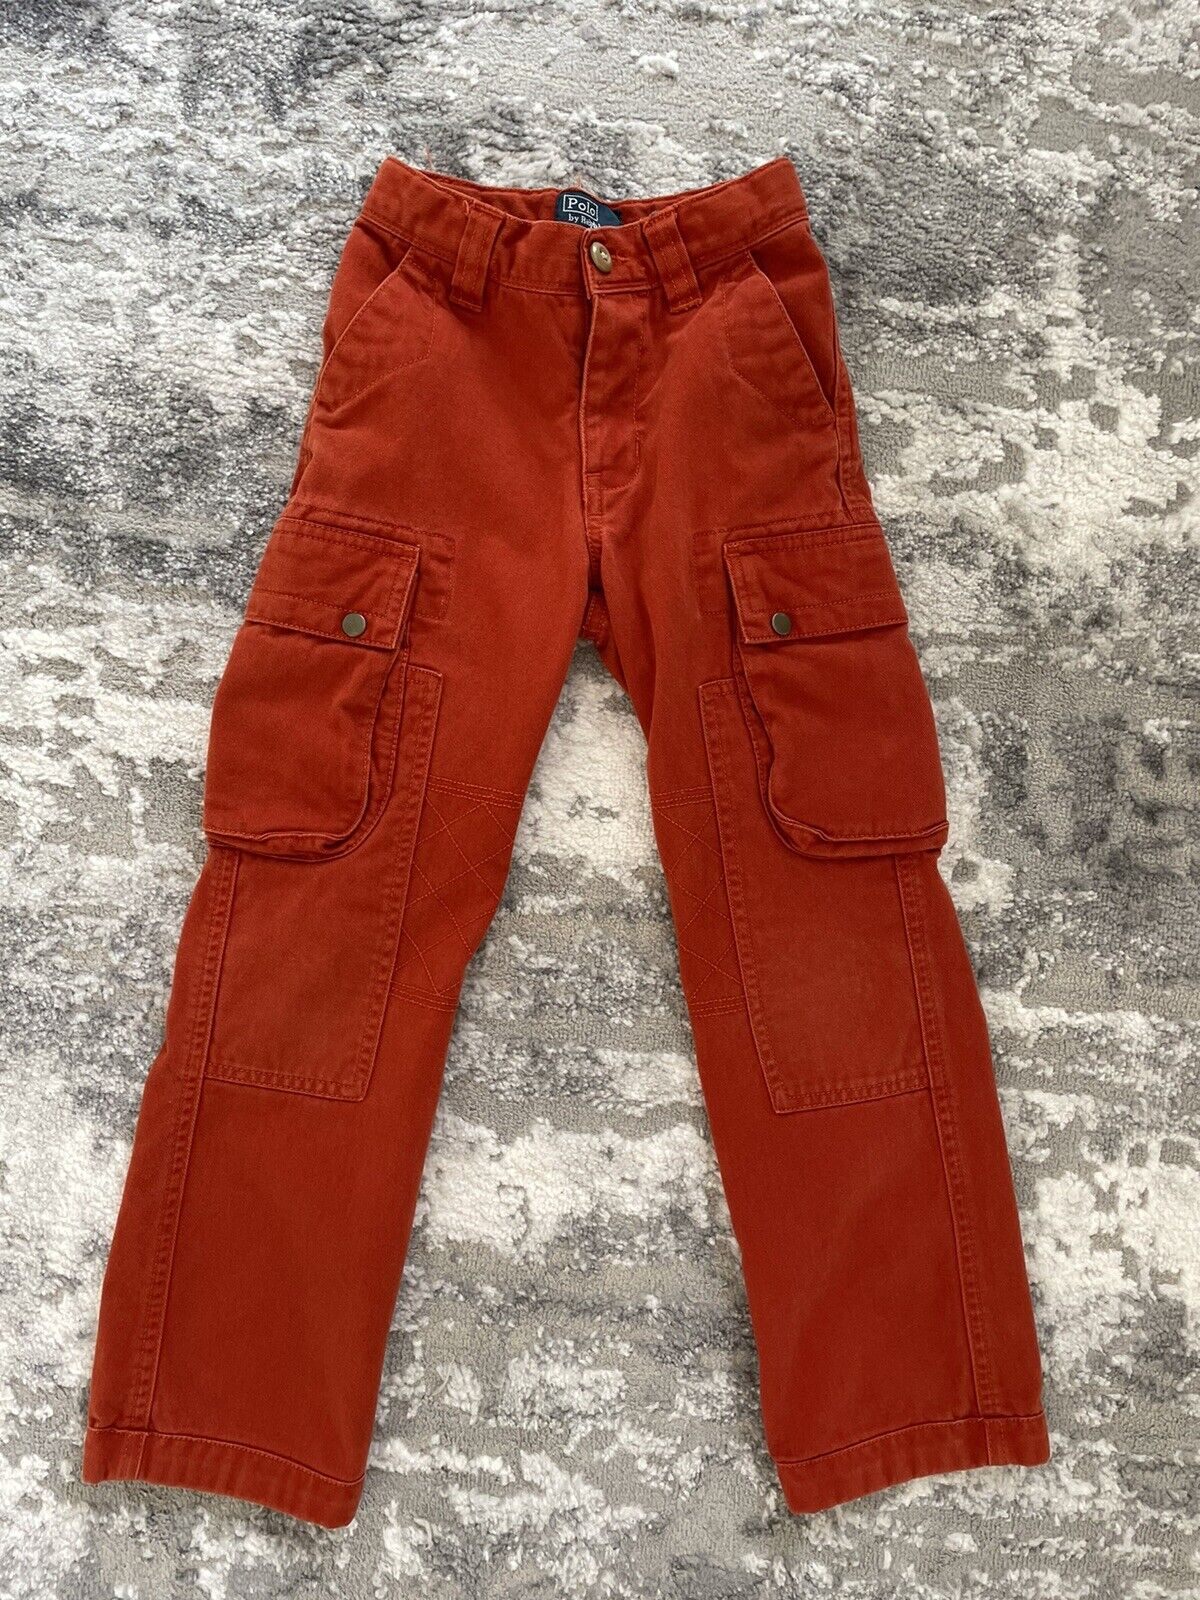 POLO Ralph Lauren Boys Girls Cargo Orange Pants Size 6